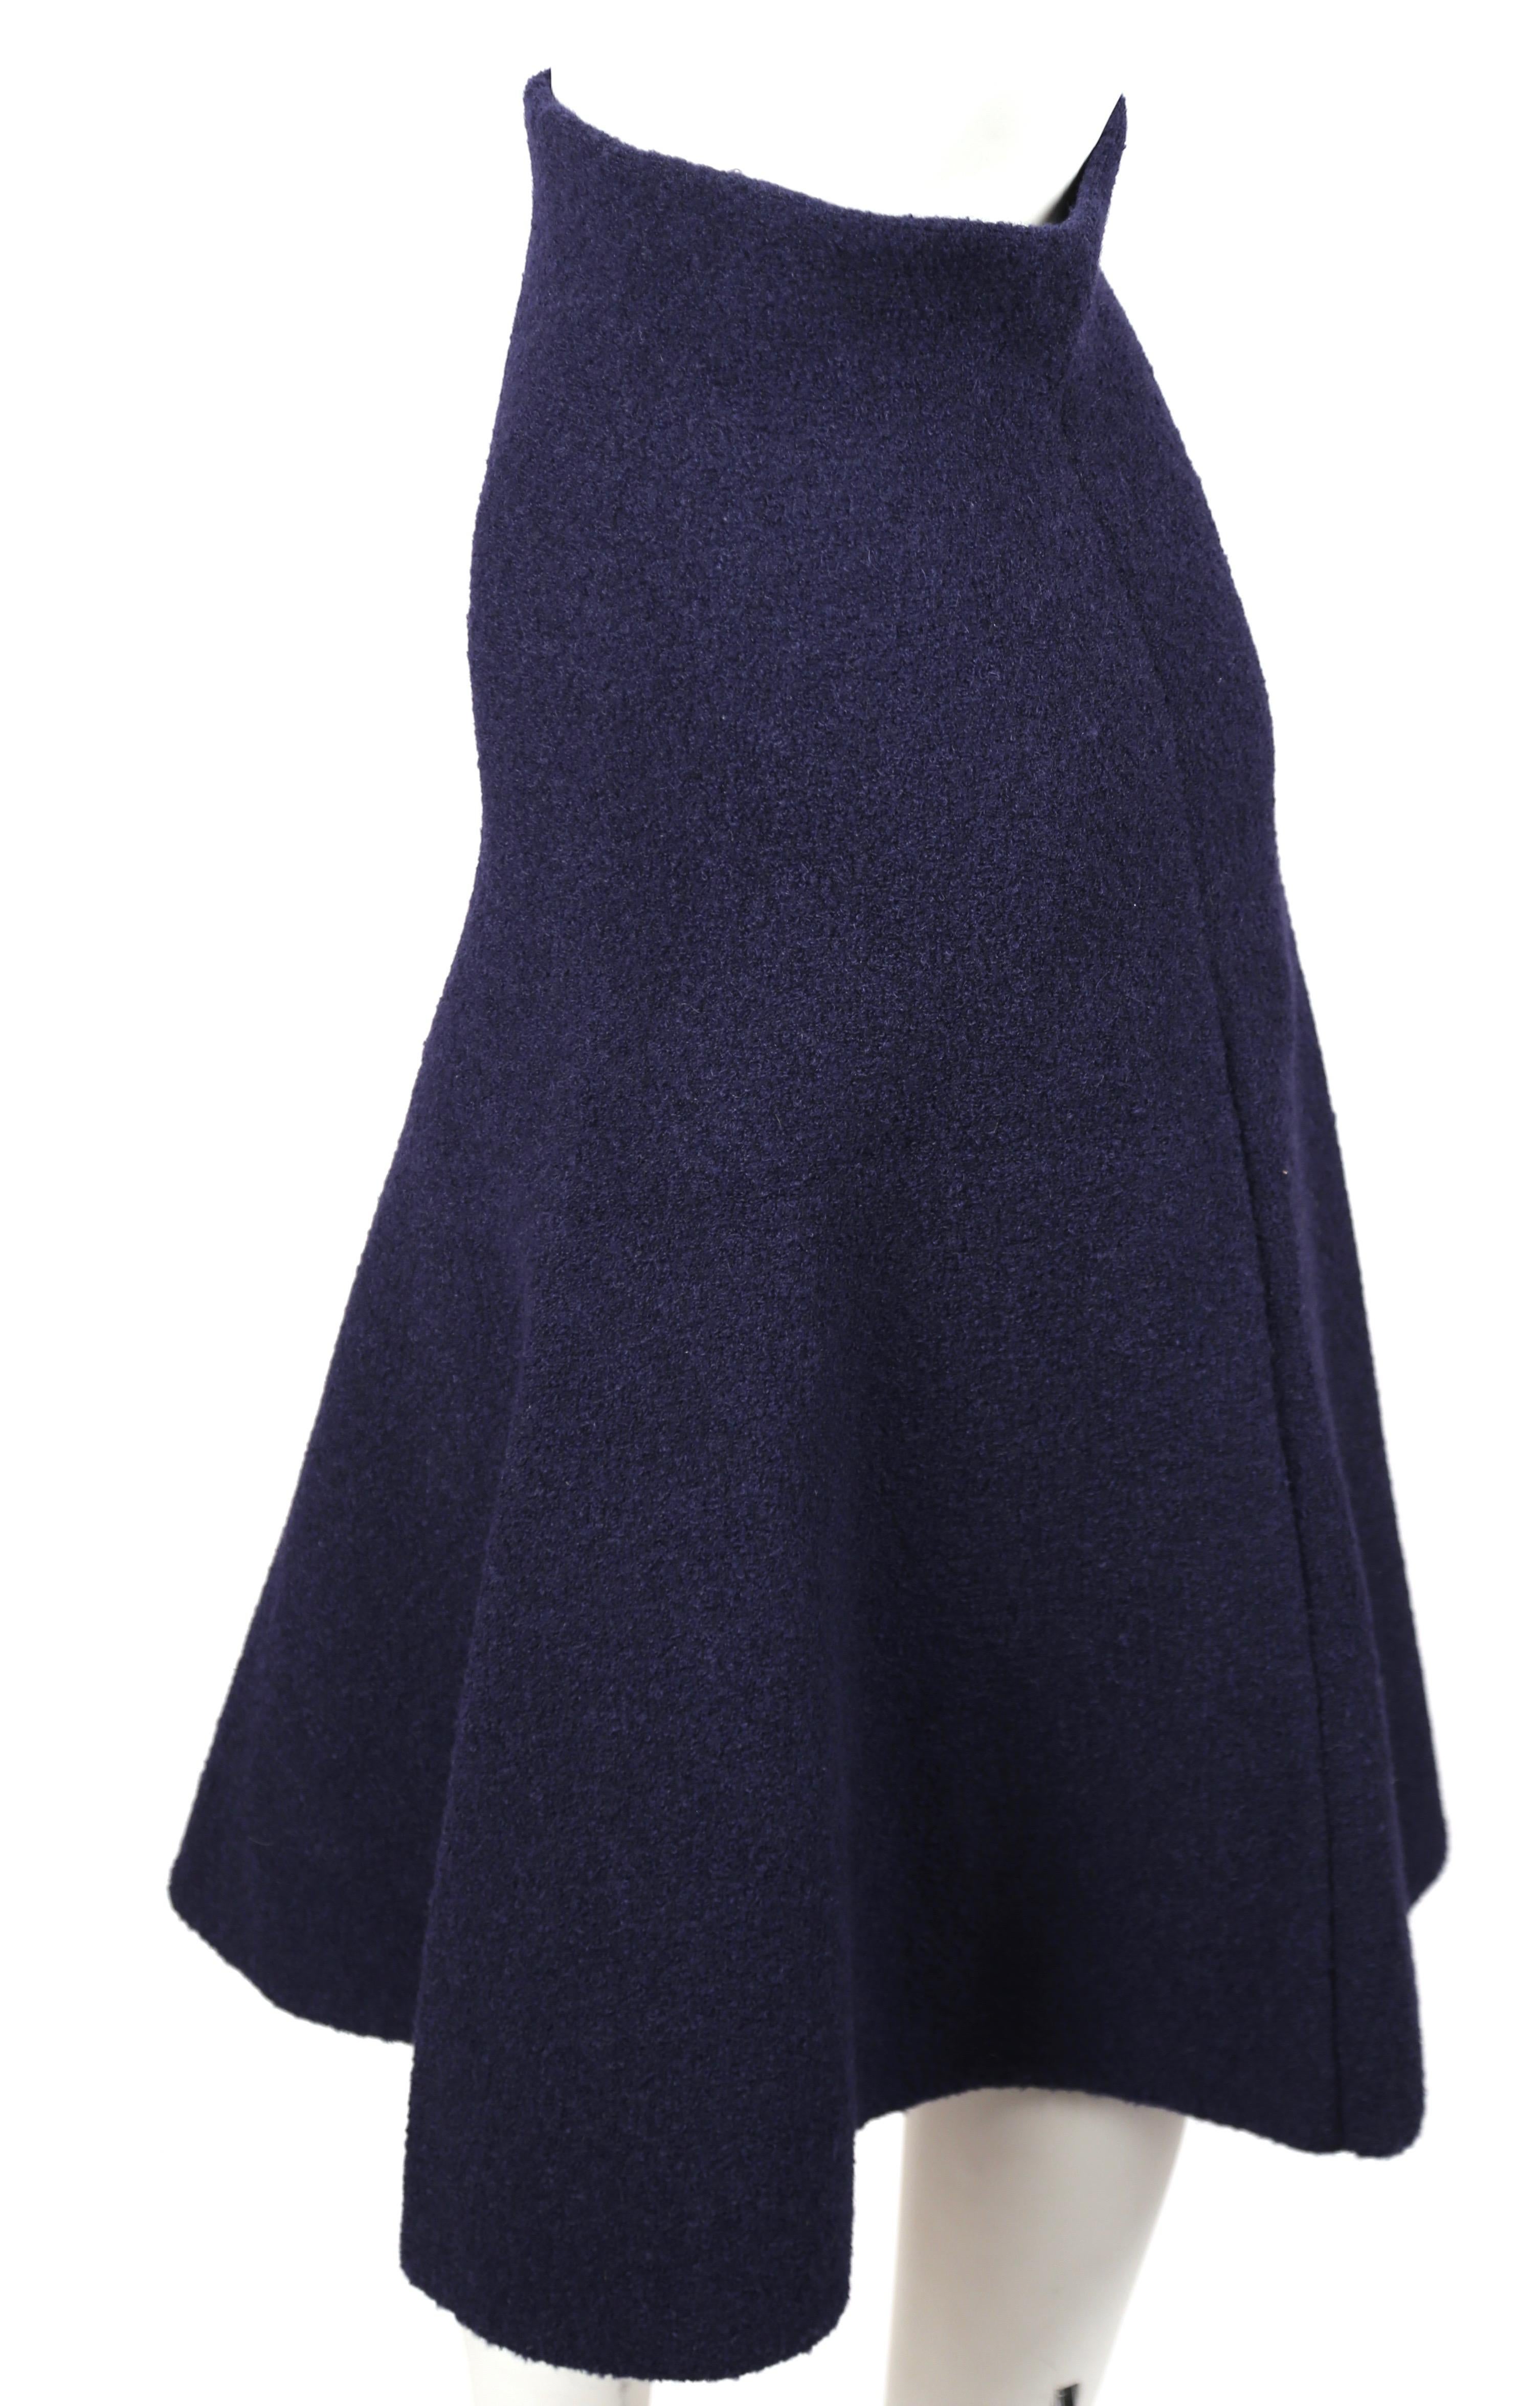 Black CELINE by Phoebe Philo navy blue textured knit trumpet skirt - runway 2013